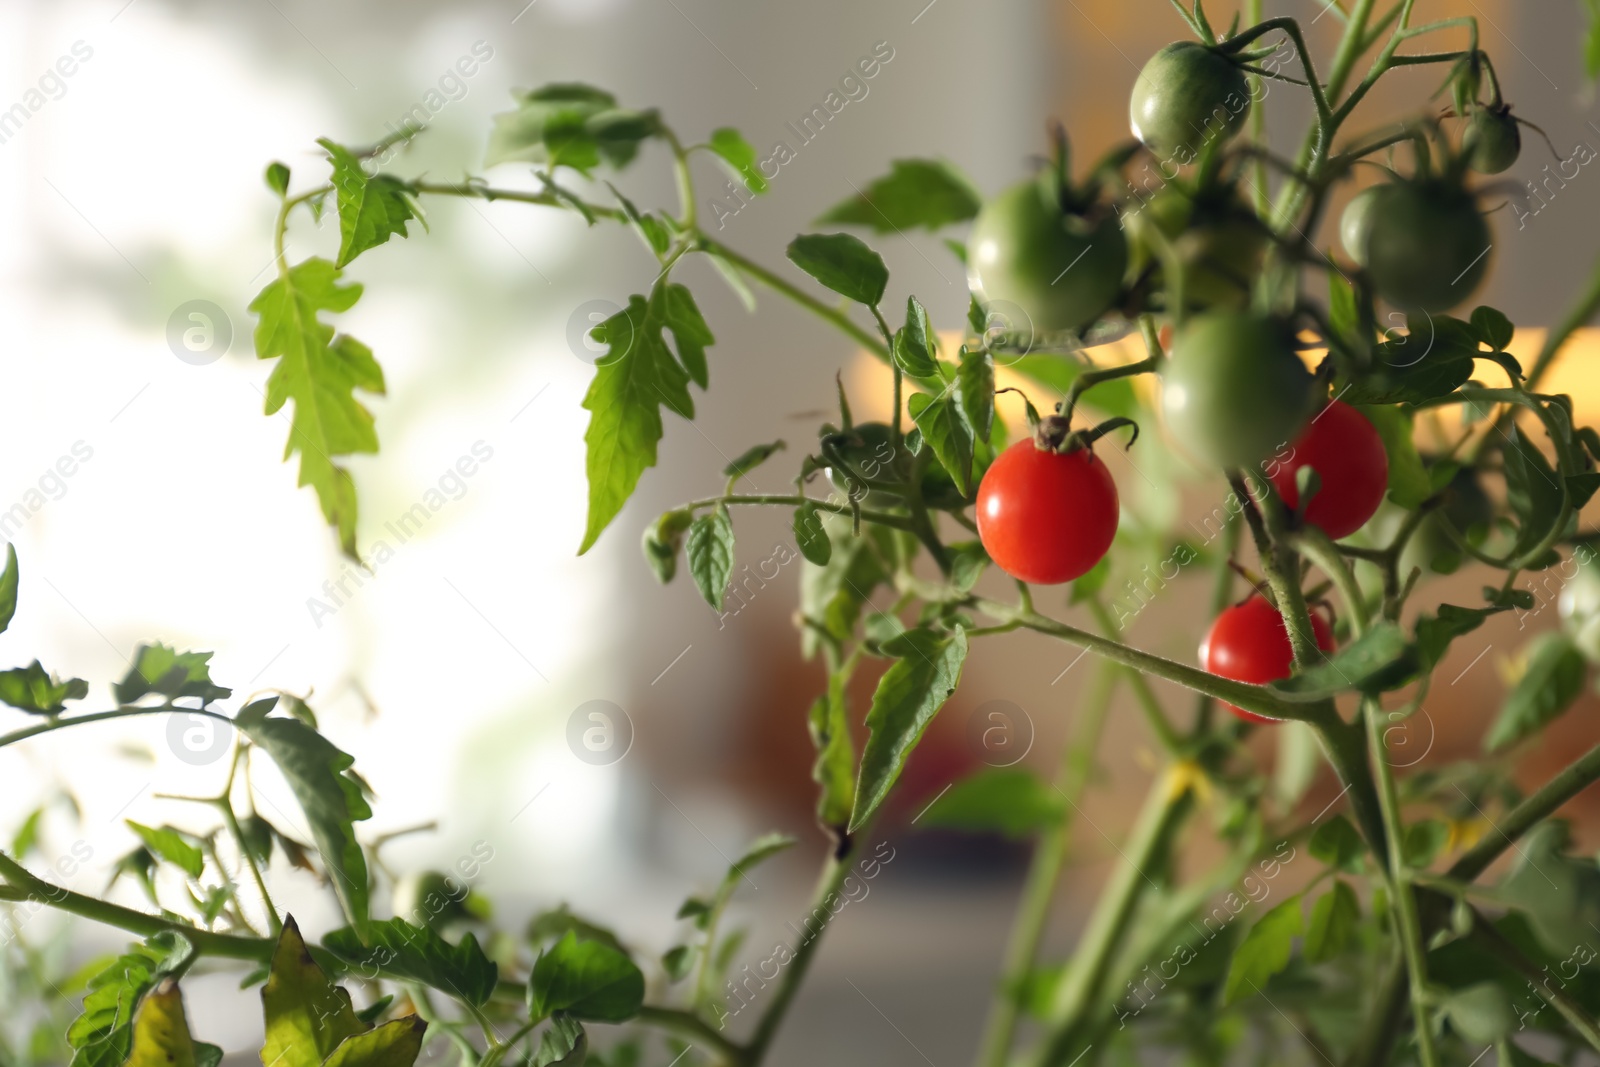 Photo of Tomato bush with ripening fruits on blurred background, closeup